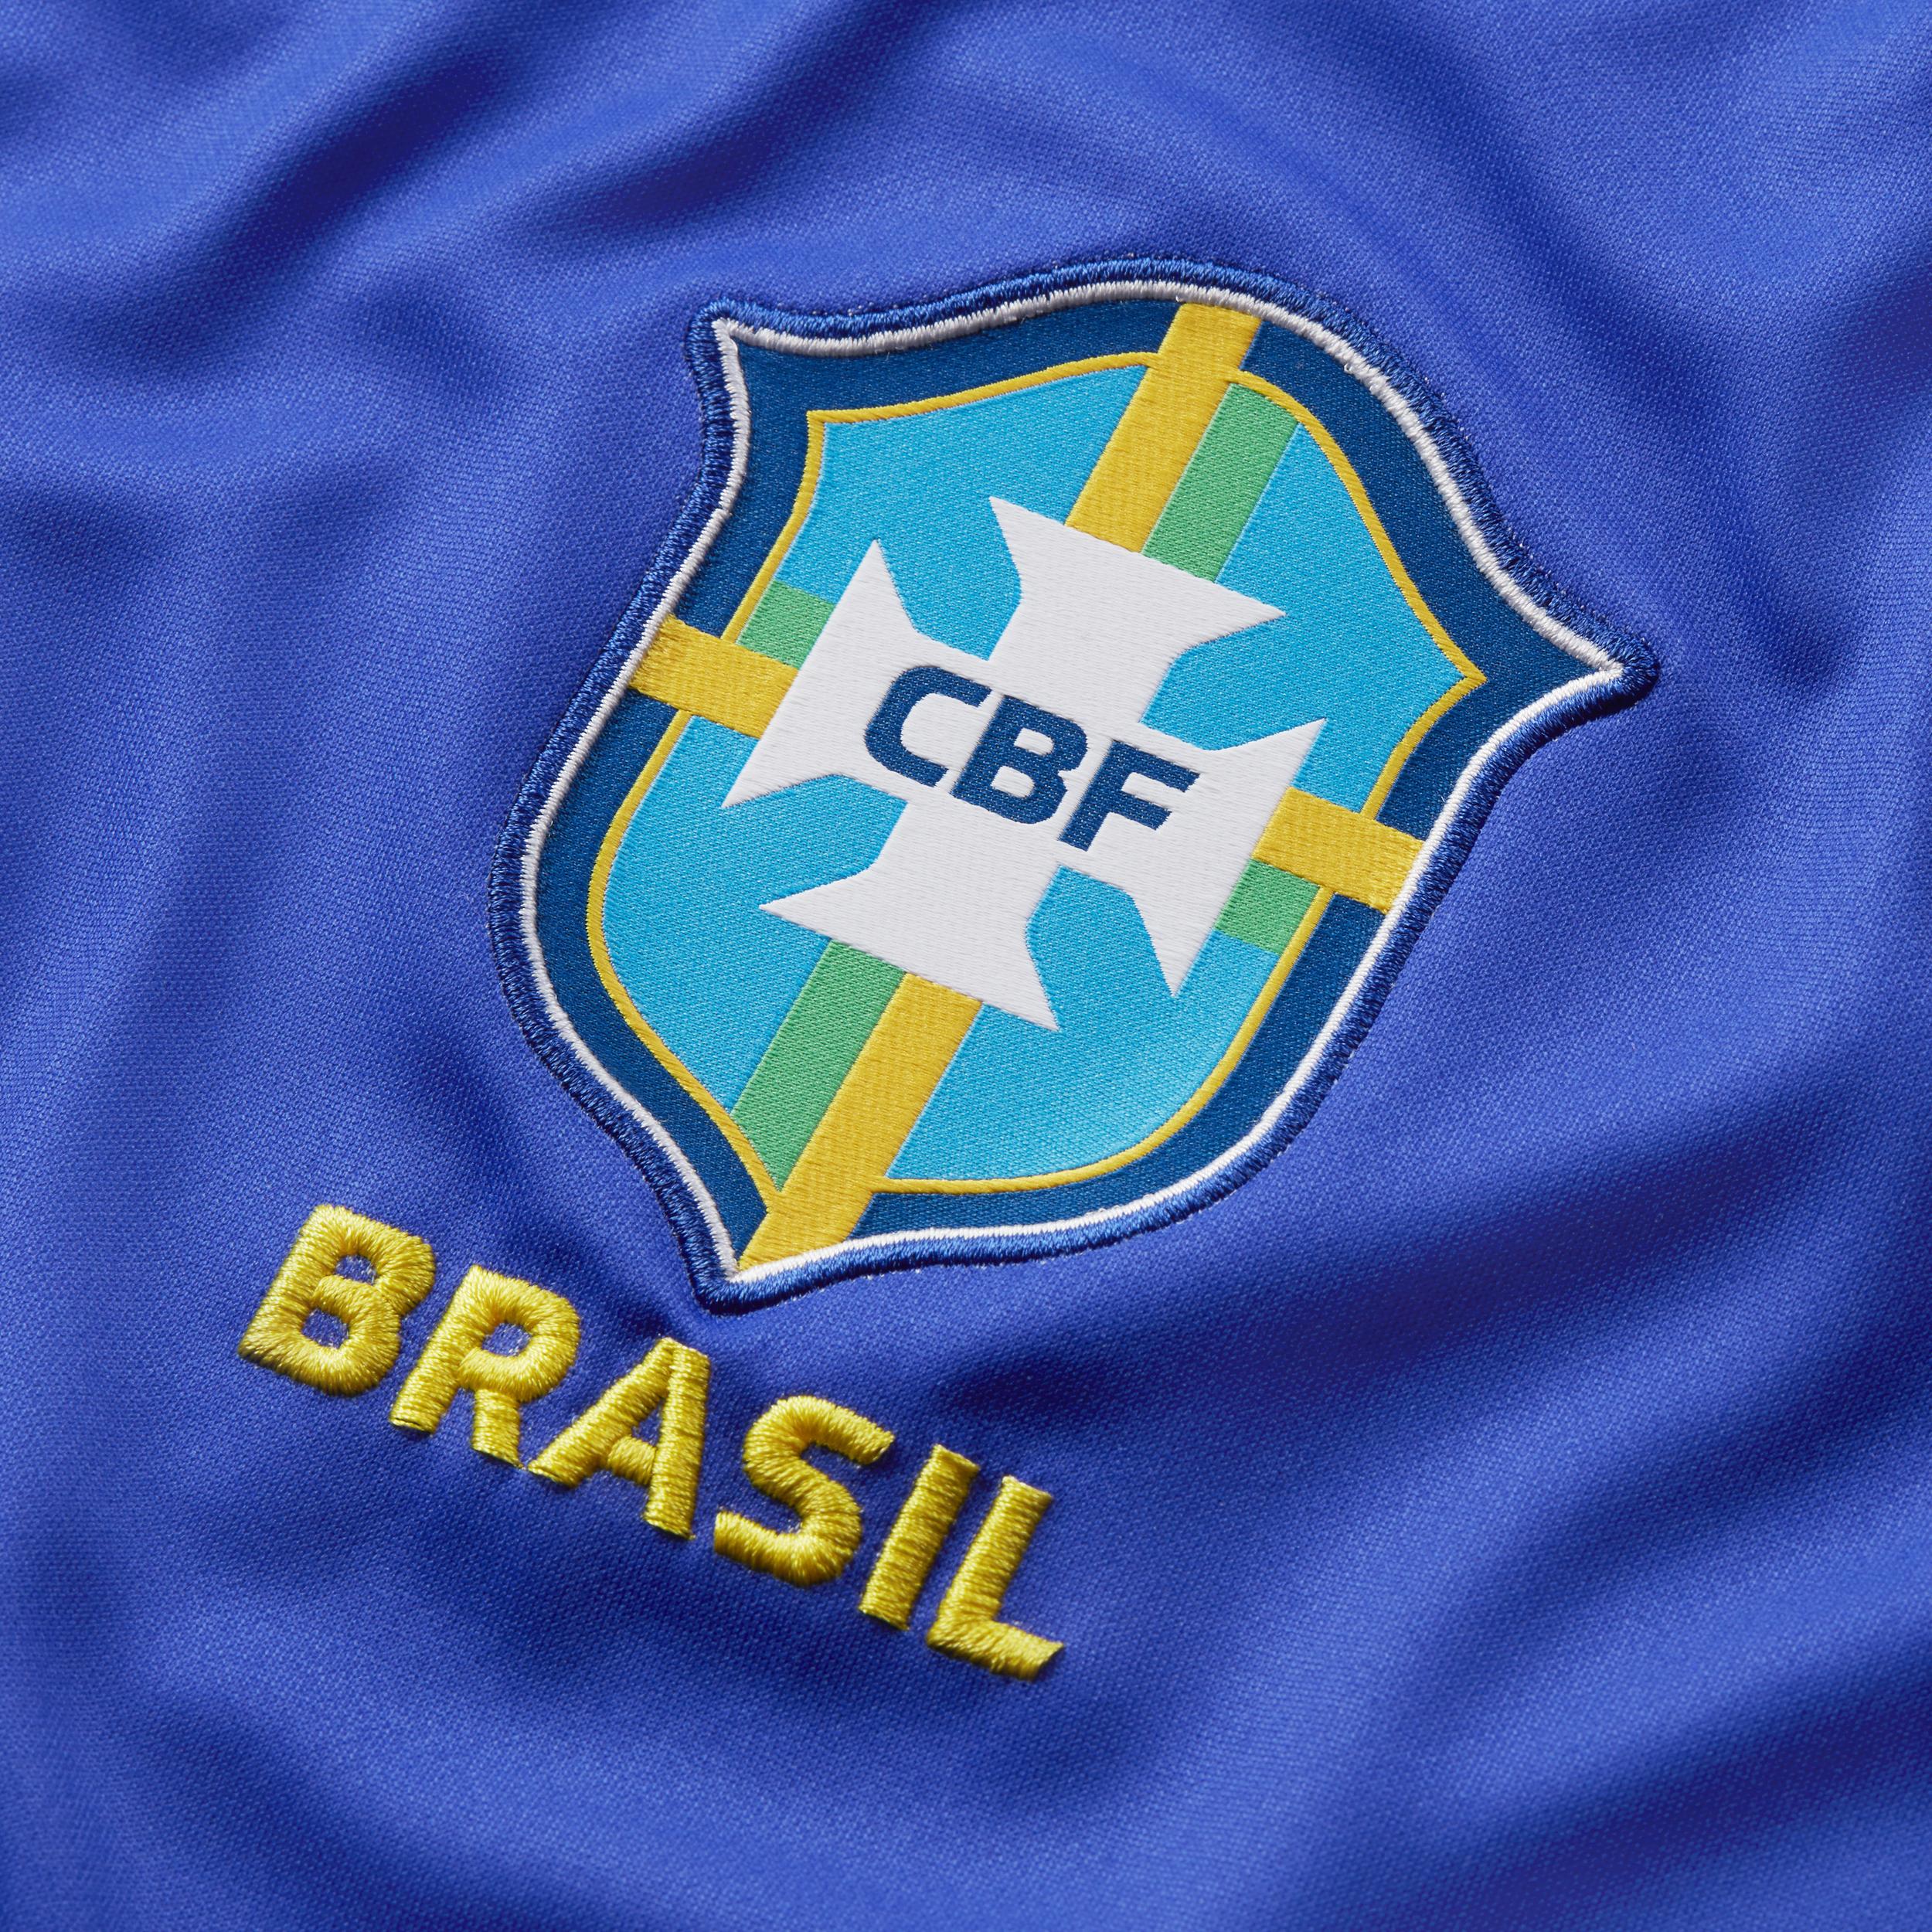 Brazil Women's National Team Nike Youth 2023 Away Stadium Replica Jersey -  Blue